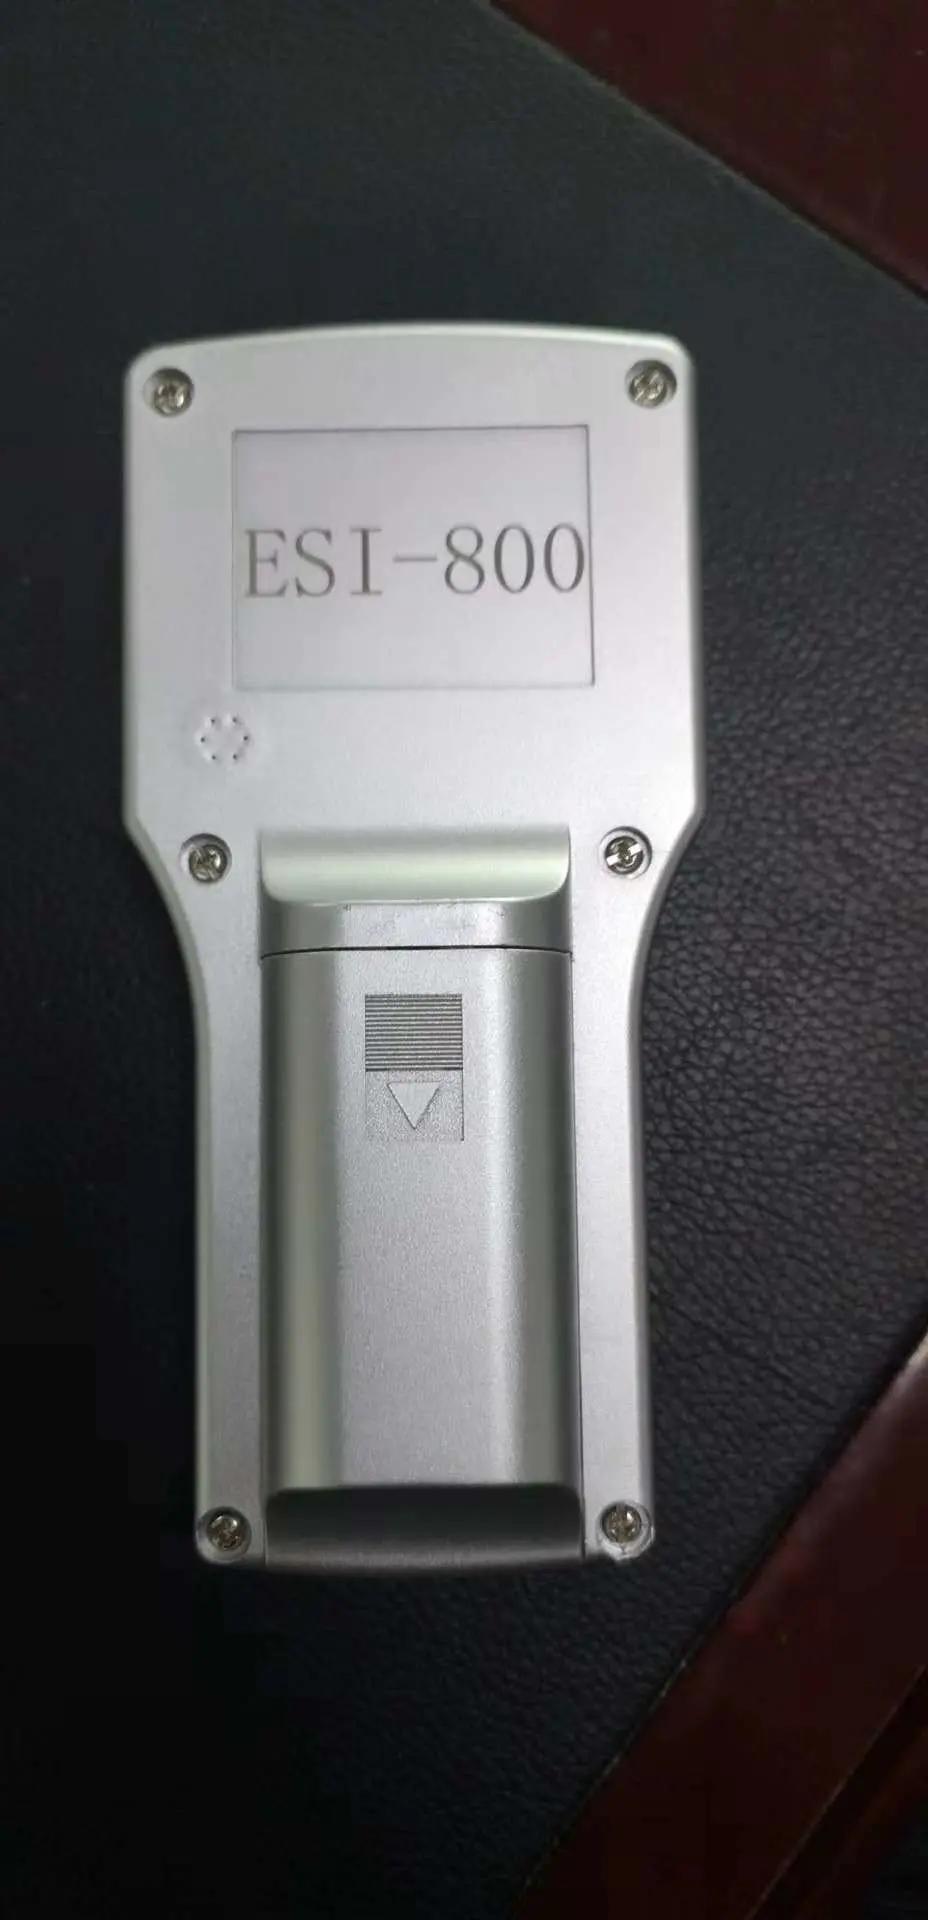 Esi-800 Overhead Fault Indicator Wireless Setting Terminal PDA